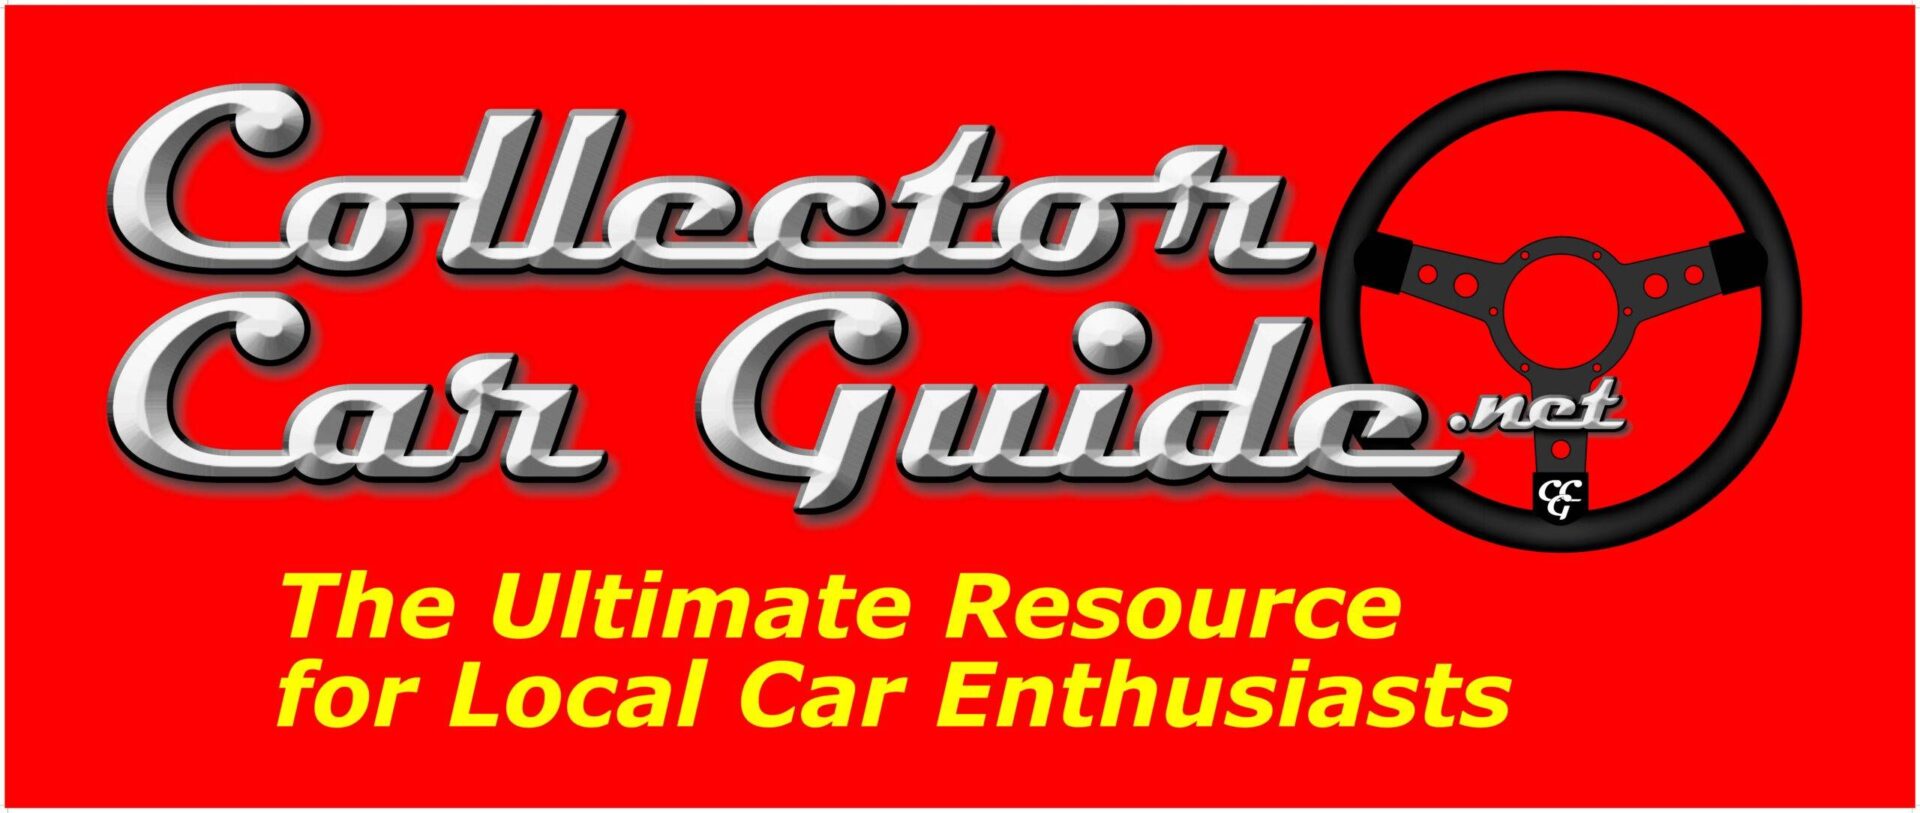 Collector Car Guide